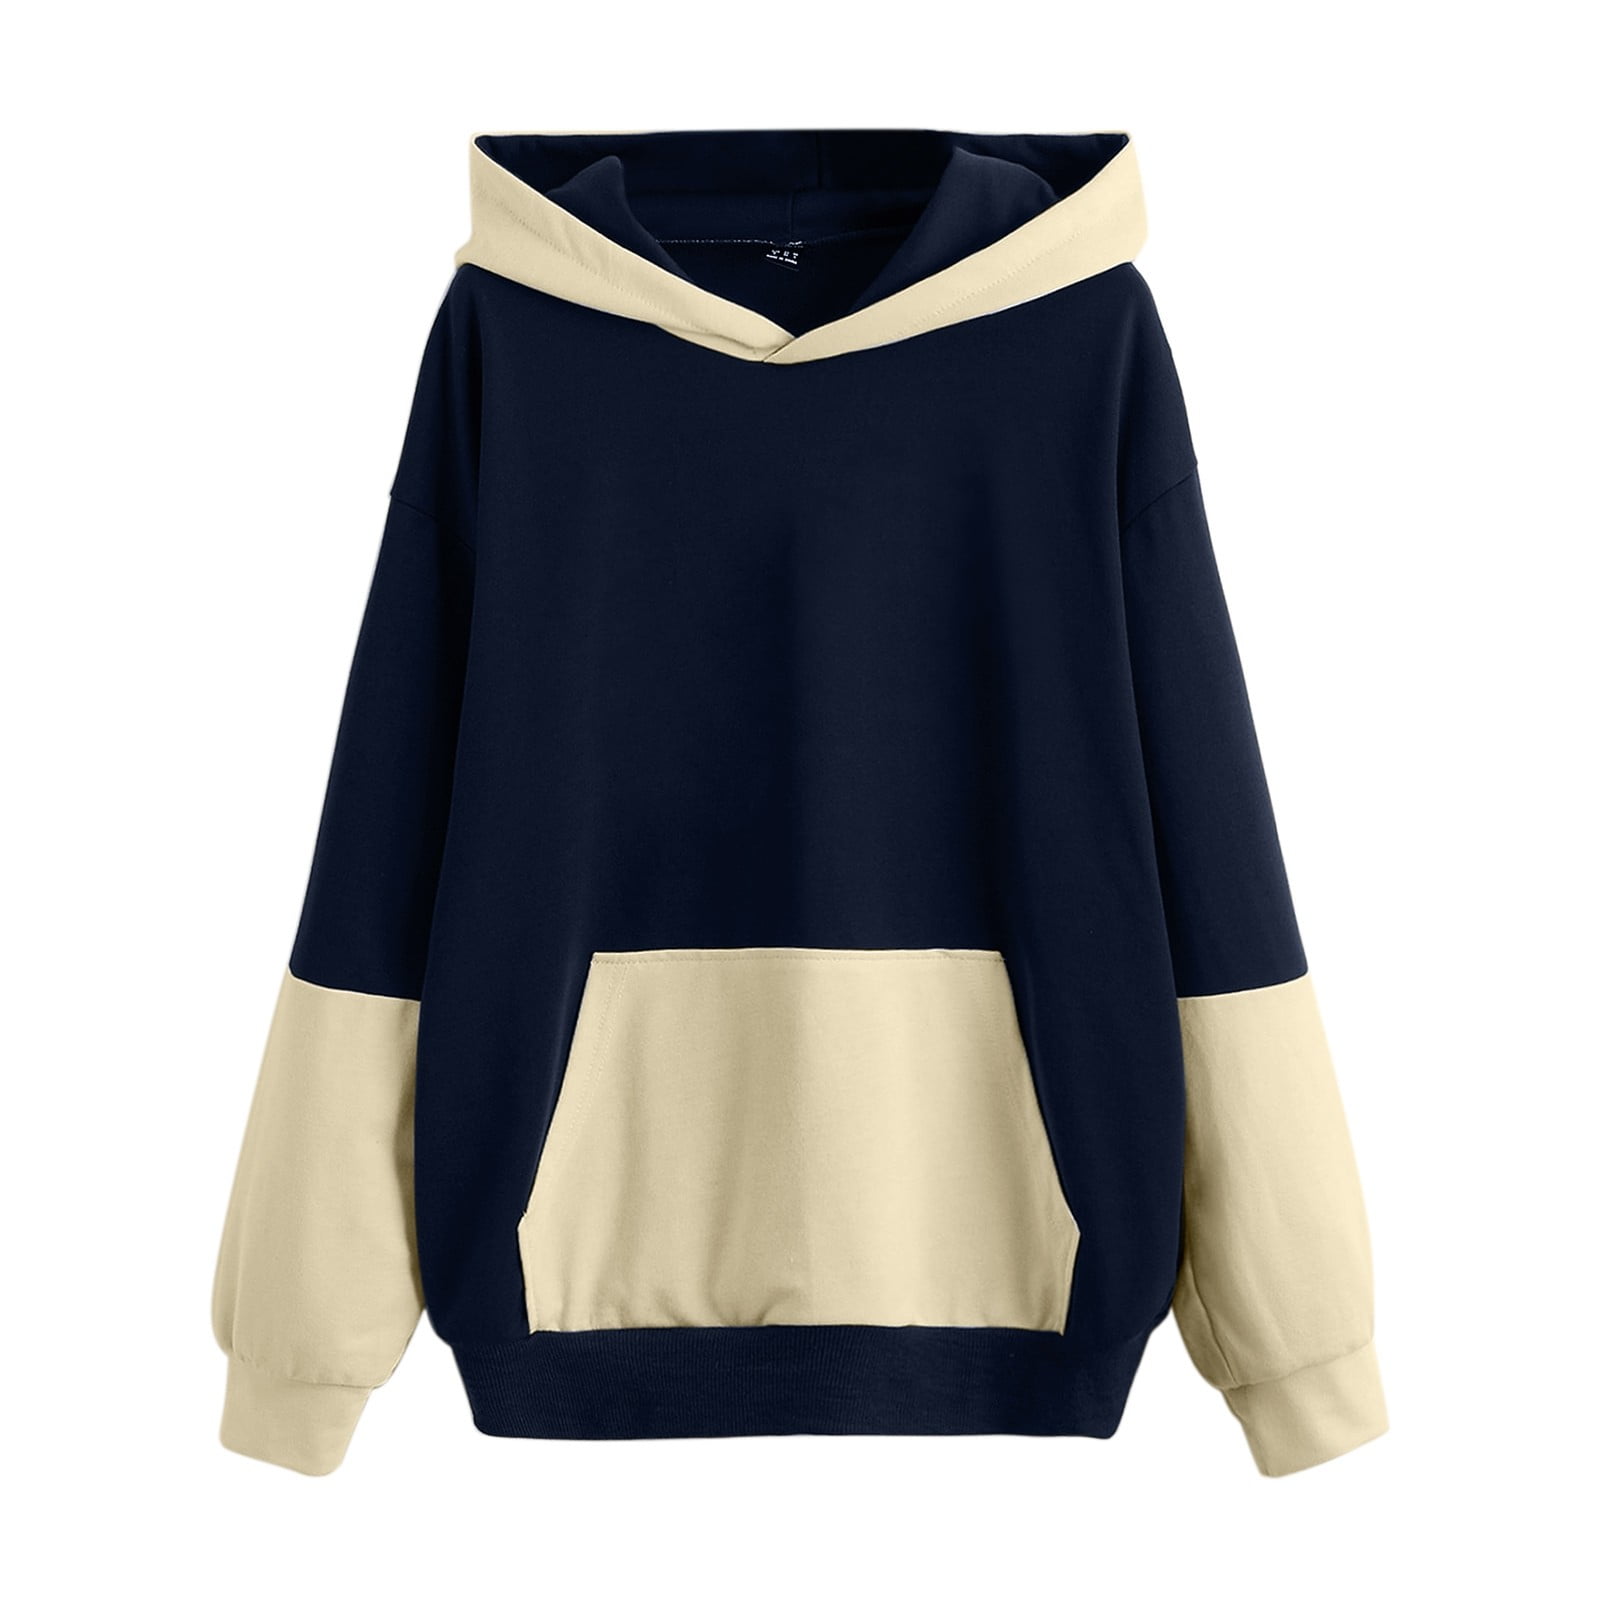 CYJ-shiba Women Fashion Long Sleeves Color Block Zip Up Sweatshirt Top